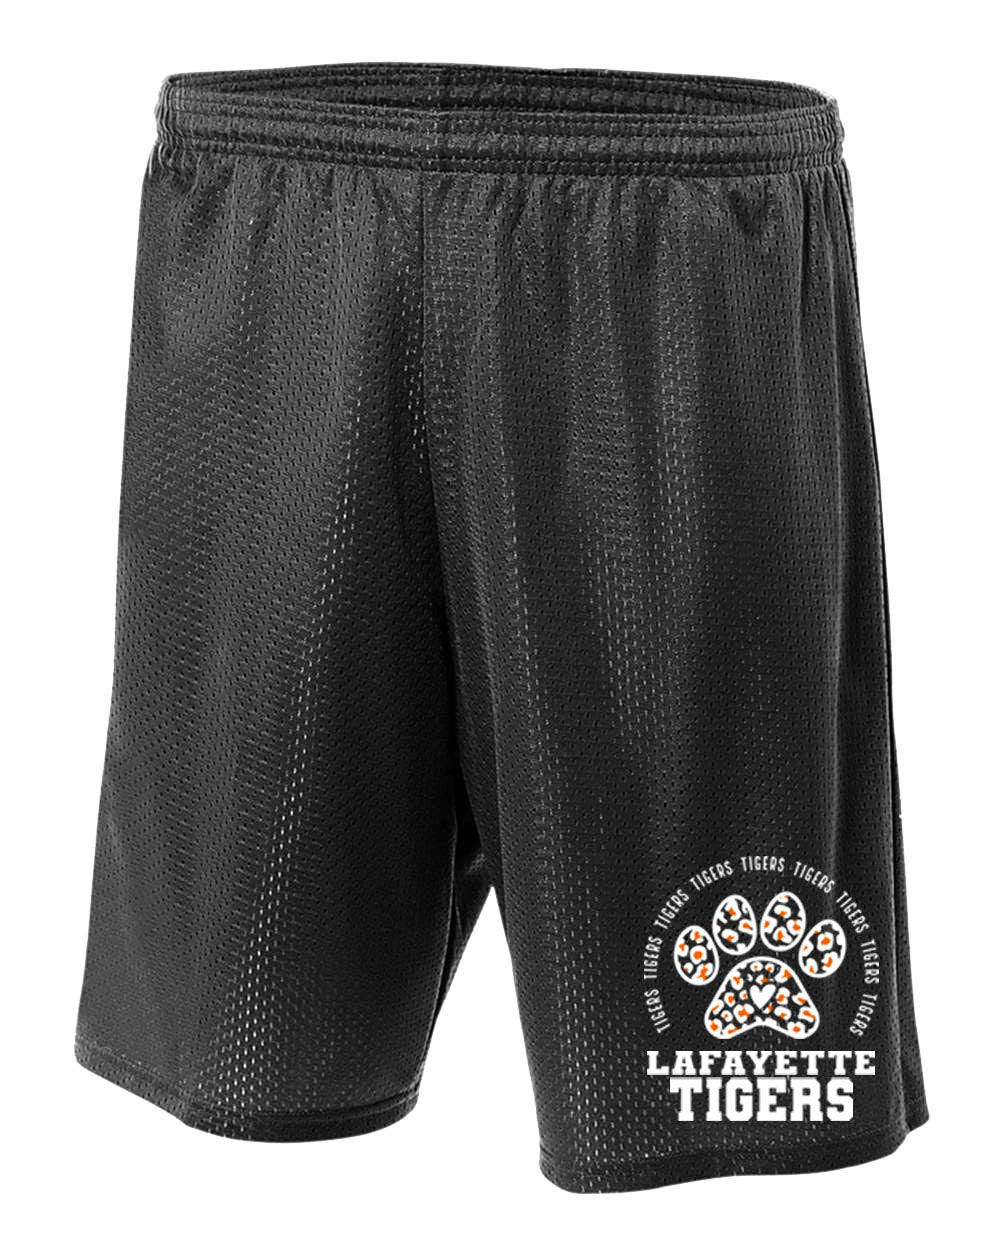 Lafayette Tigers Design 9 Mesh Shorts